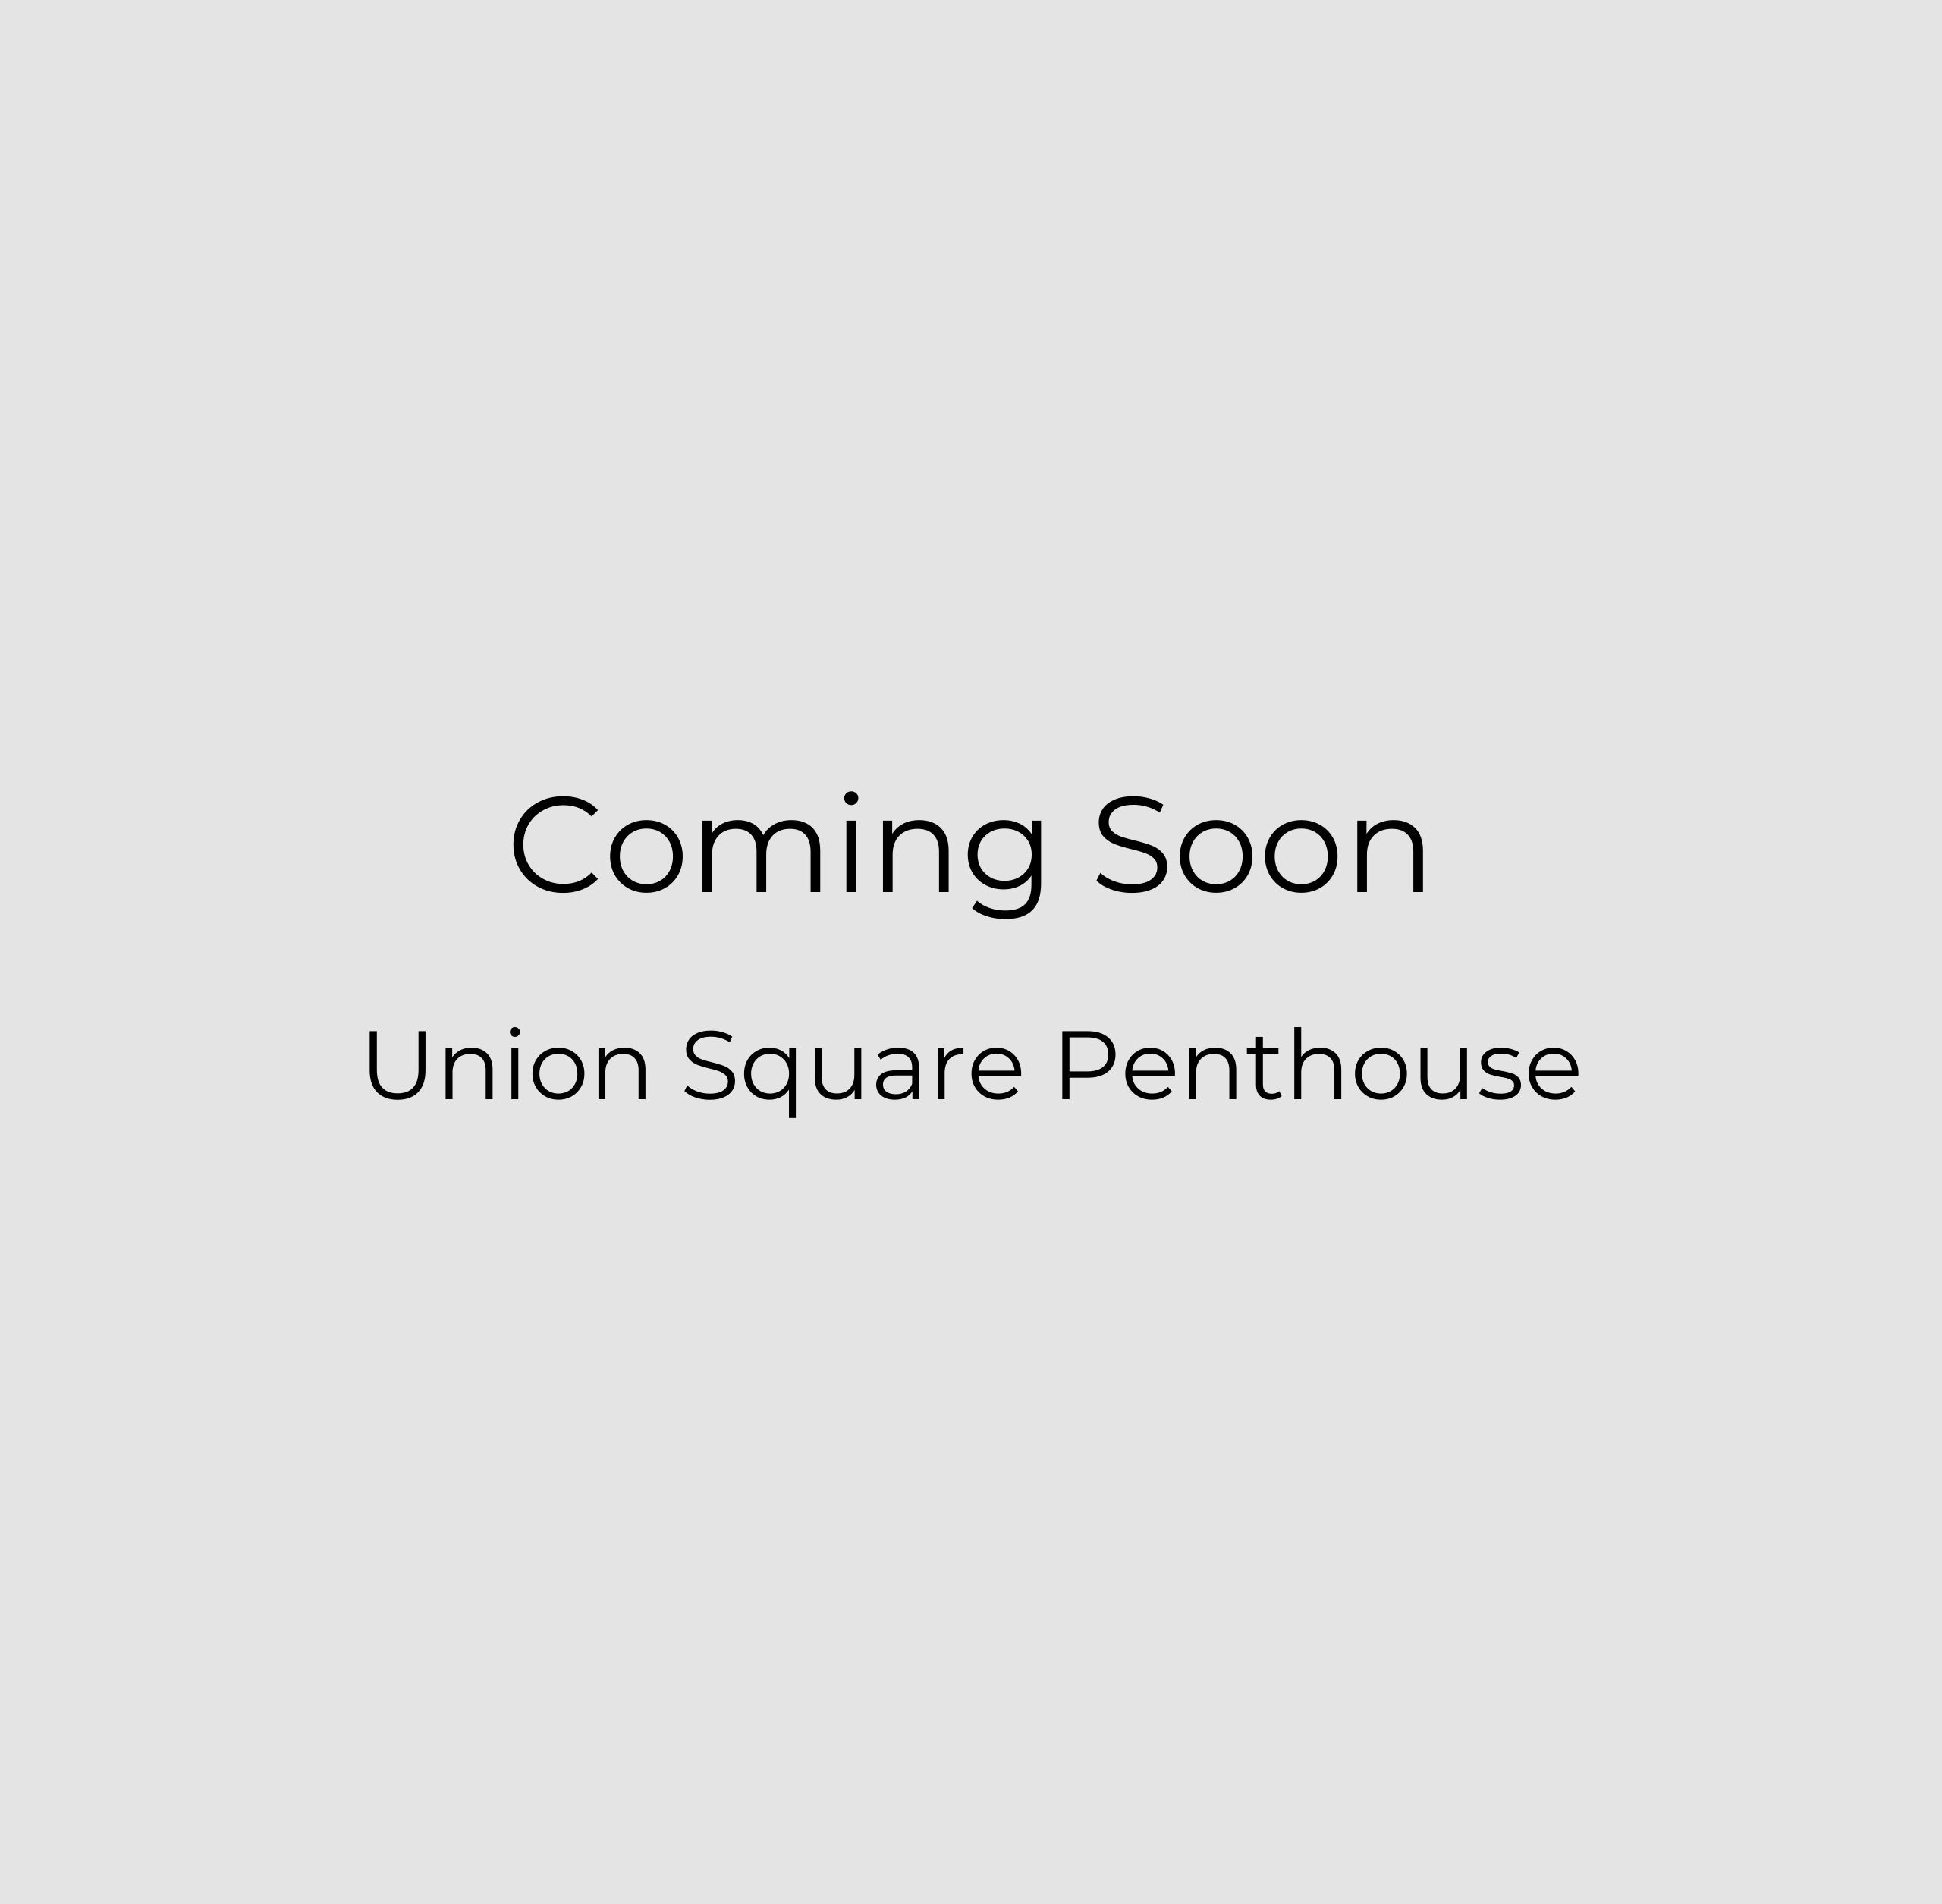 Union Square Penthouse